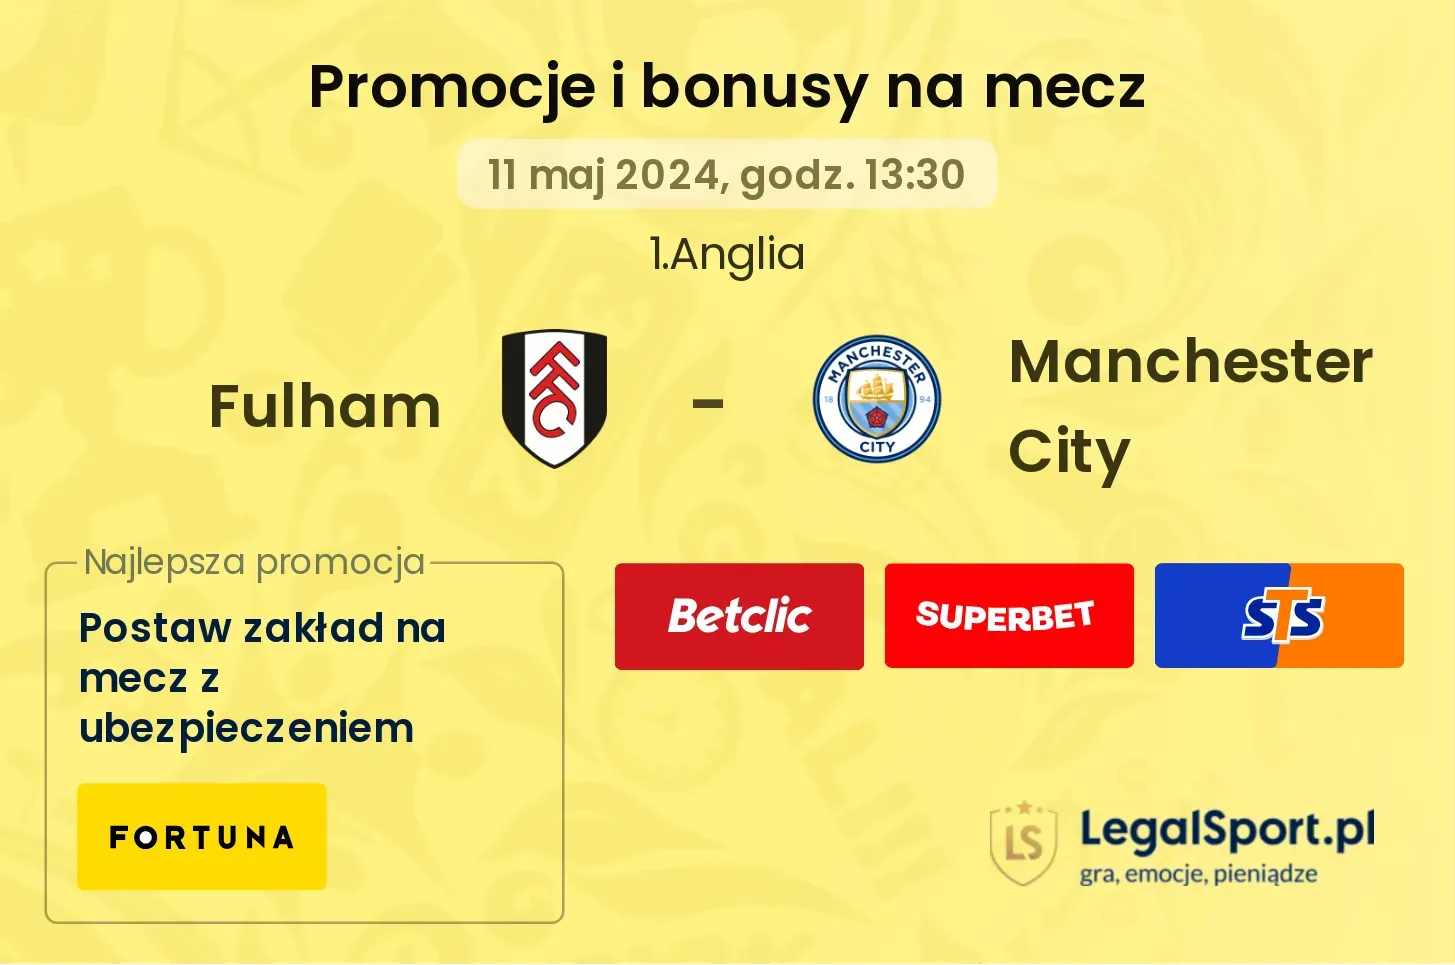 Fulham - Manchester City promocje bonusy na mecz